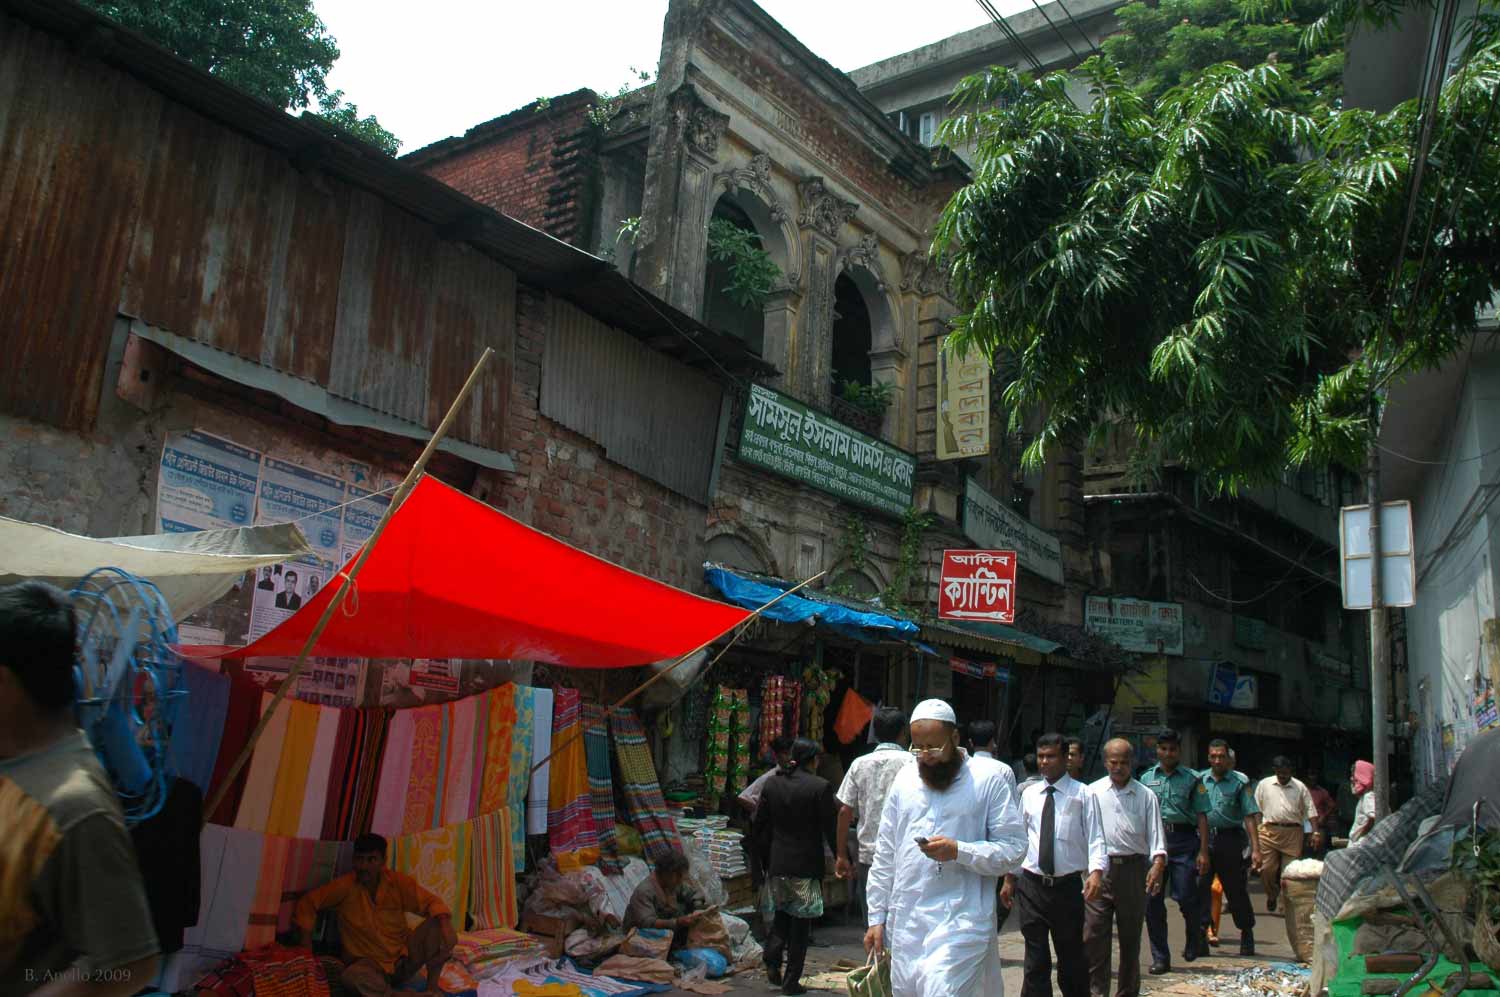 A street scene in Old Dhaka